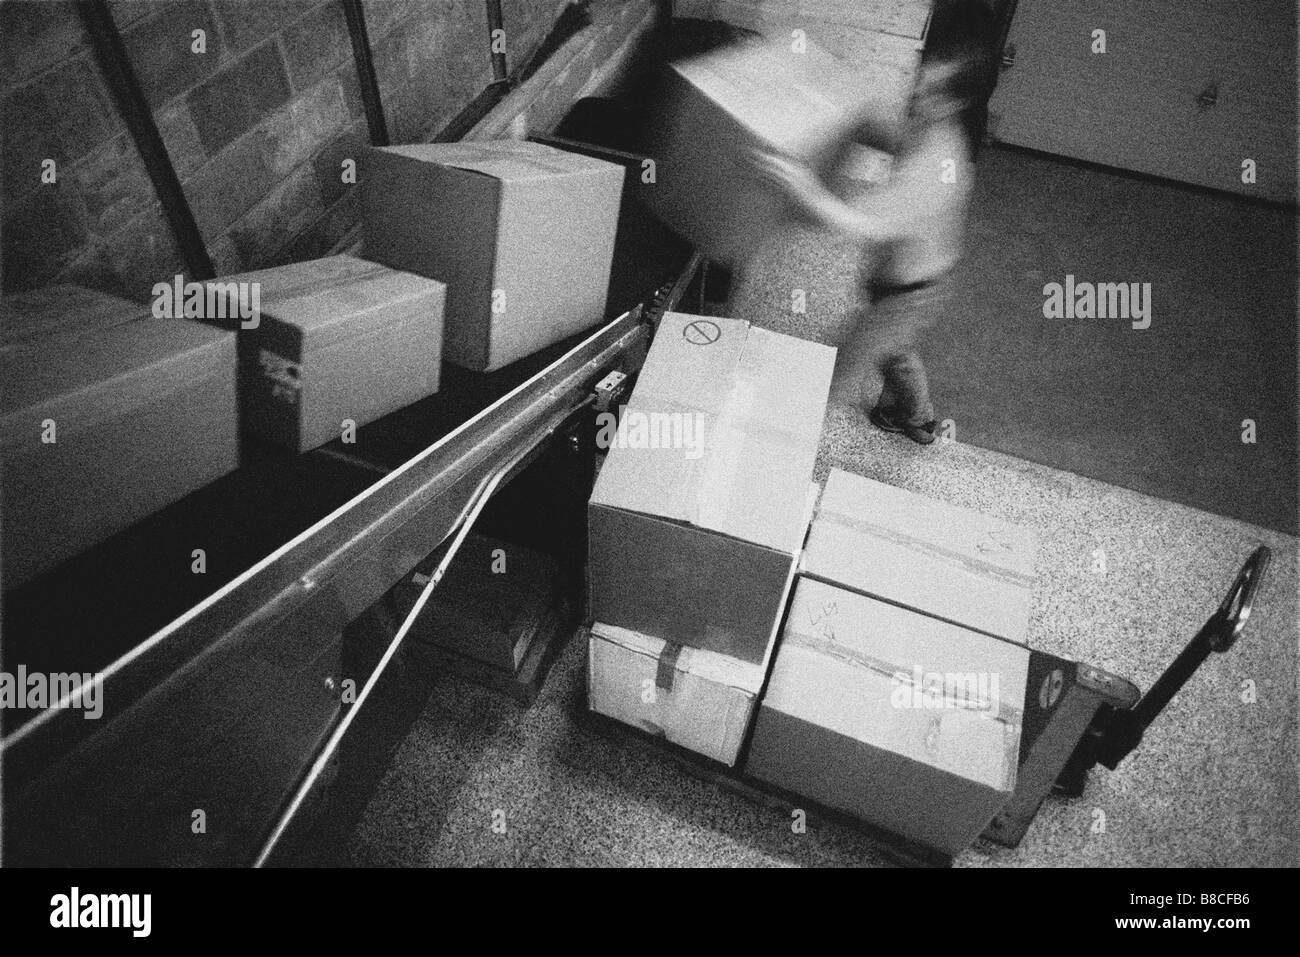 FL6279, Harry Nowell; Man Unloading Boxes Warehouse Stock Photo